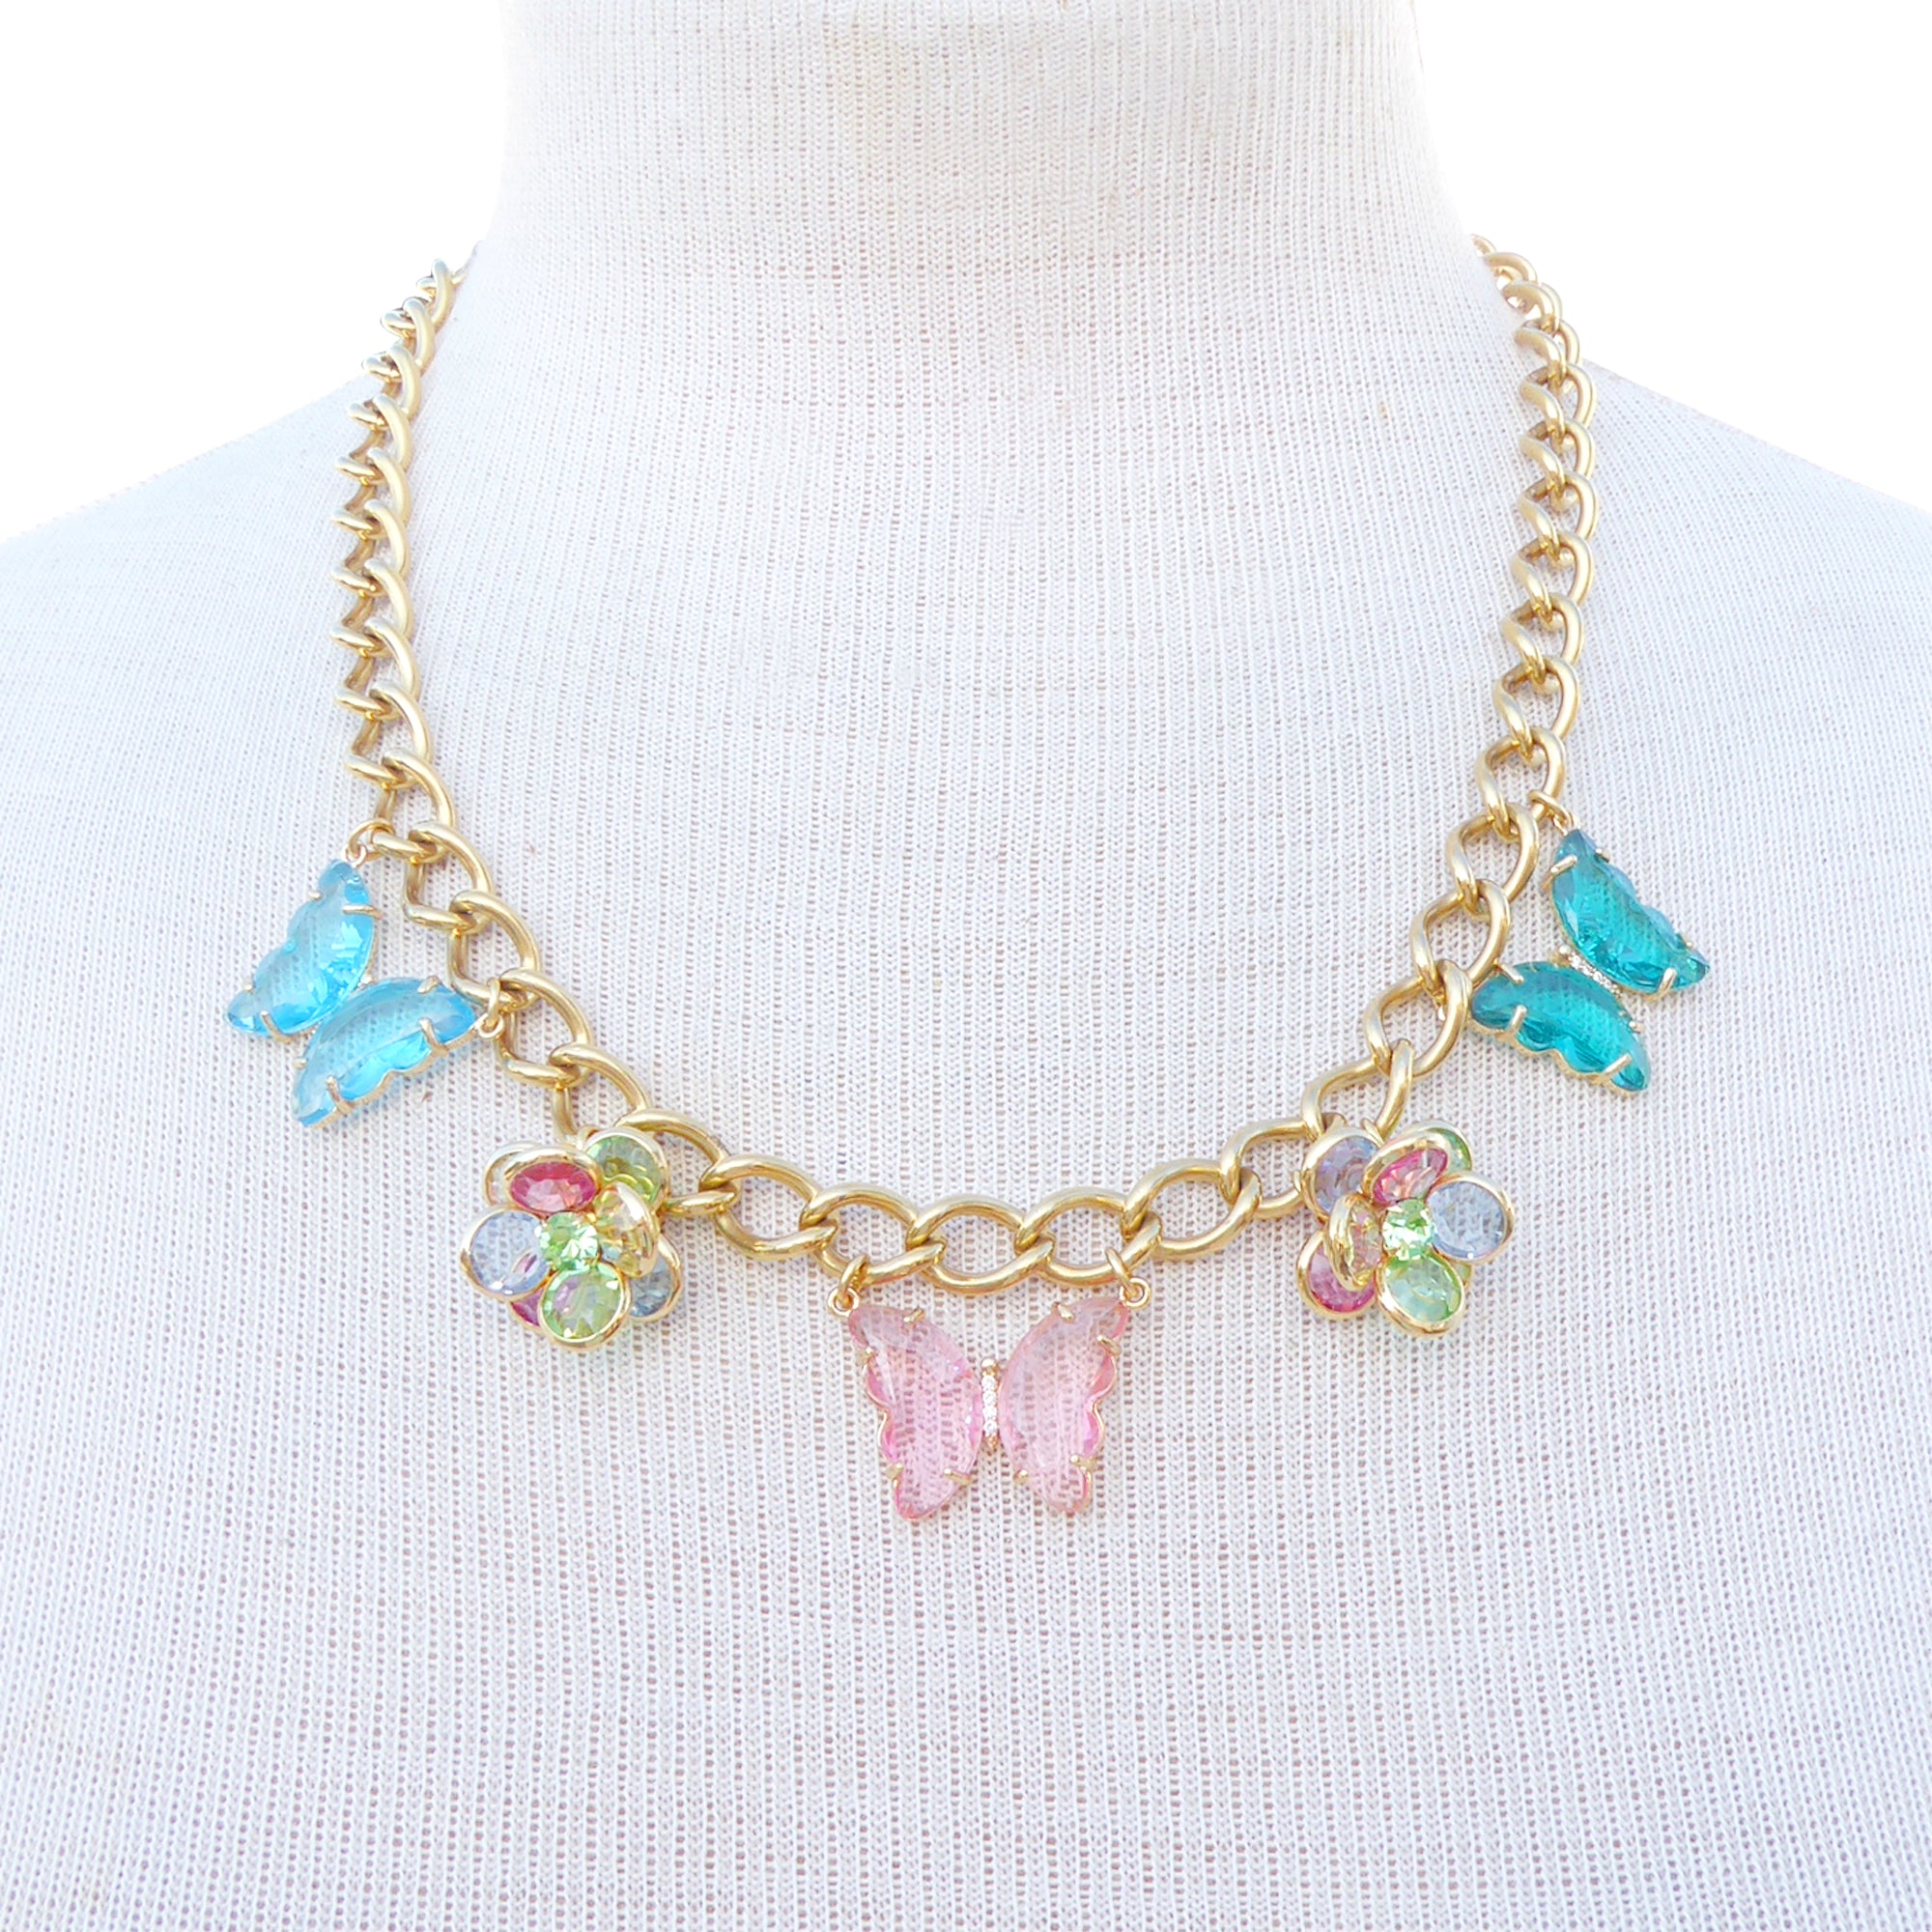 Glass butterfly necklace